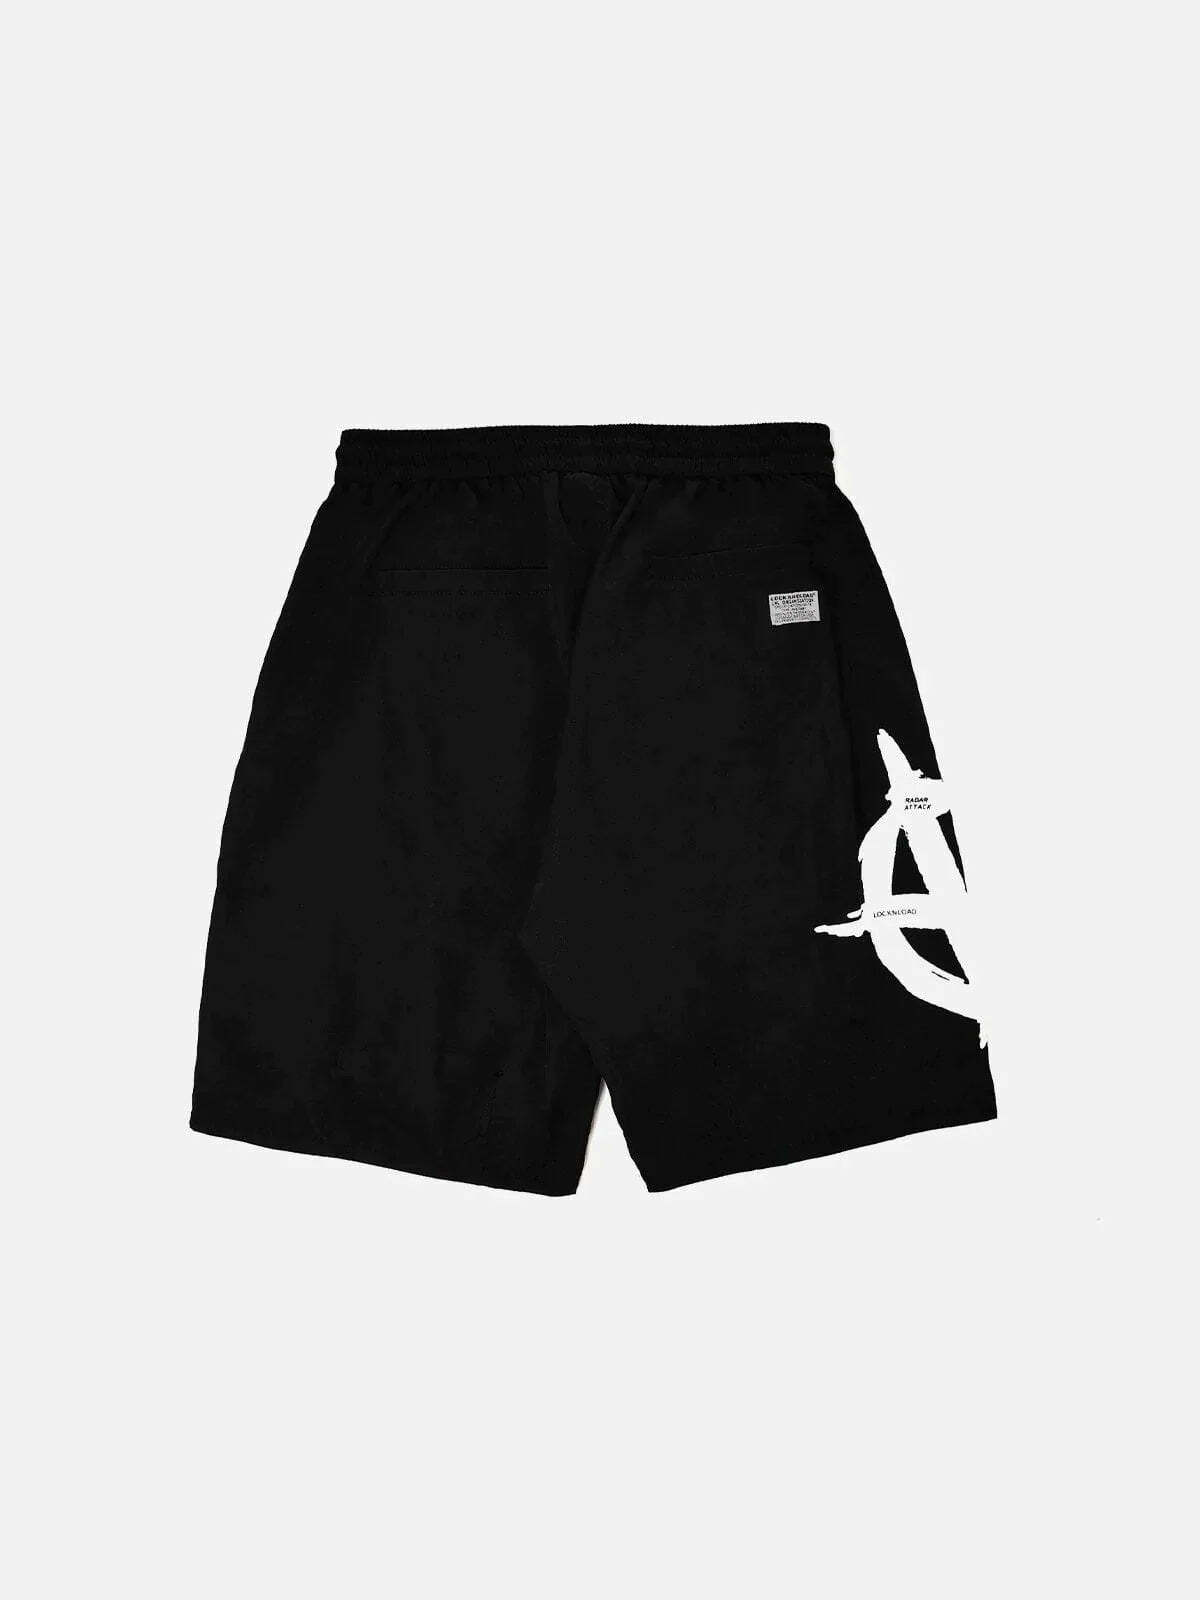 sleek hip hop shorts urban streetwear essential 2993